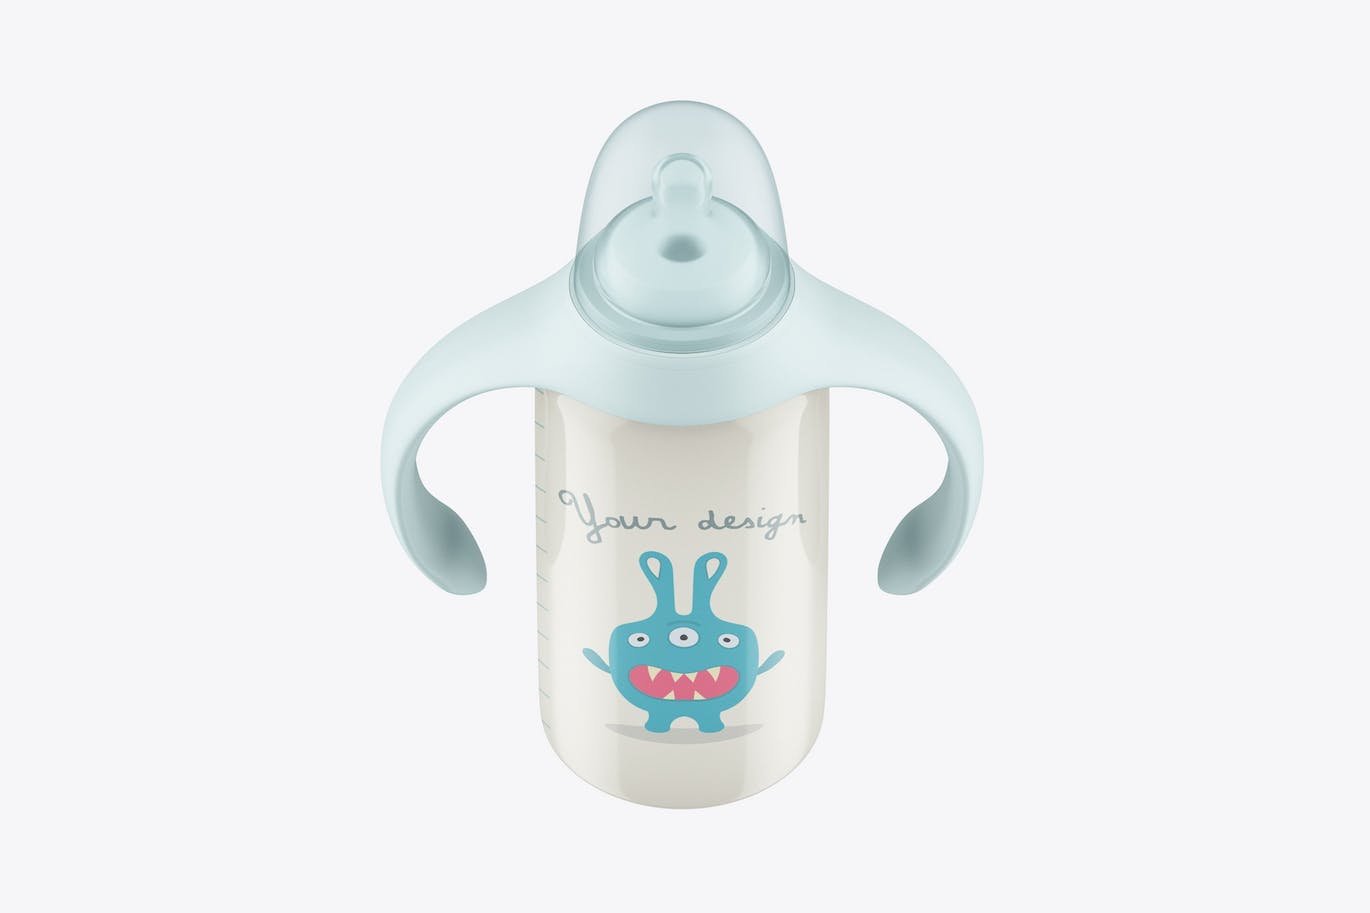 带手柄的婴儿奶瓶样机模板 Baby Bottle with Handles Mockup 样机素材 第1张